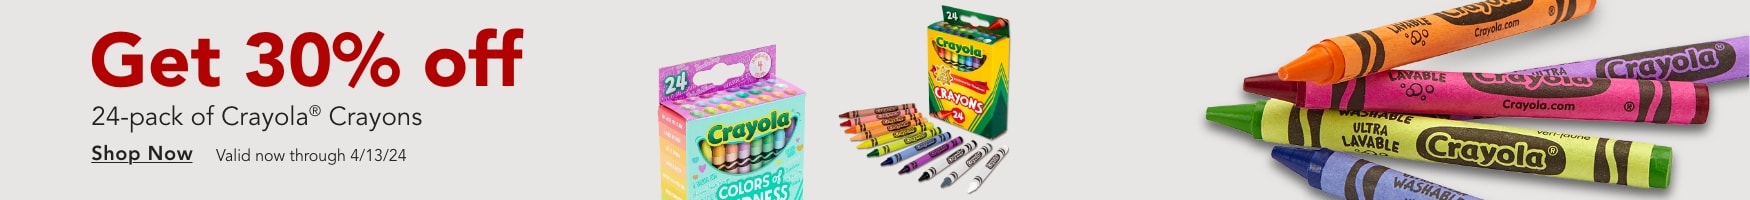 Get 30% off 24 pk of Crayola Crayons